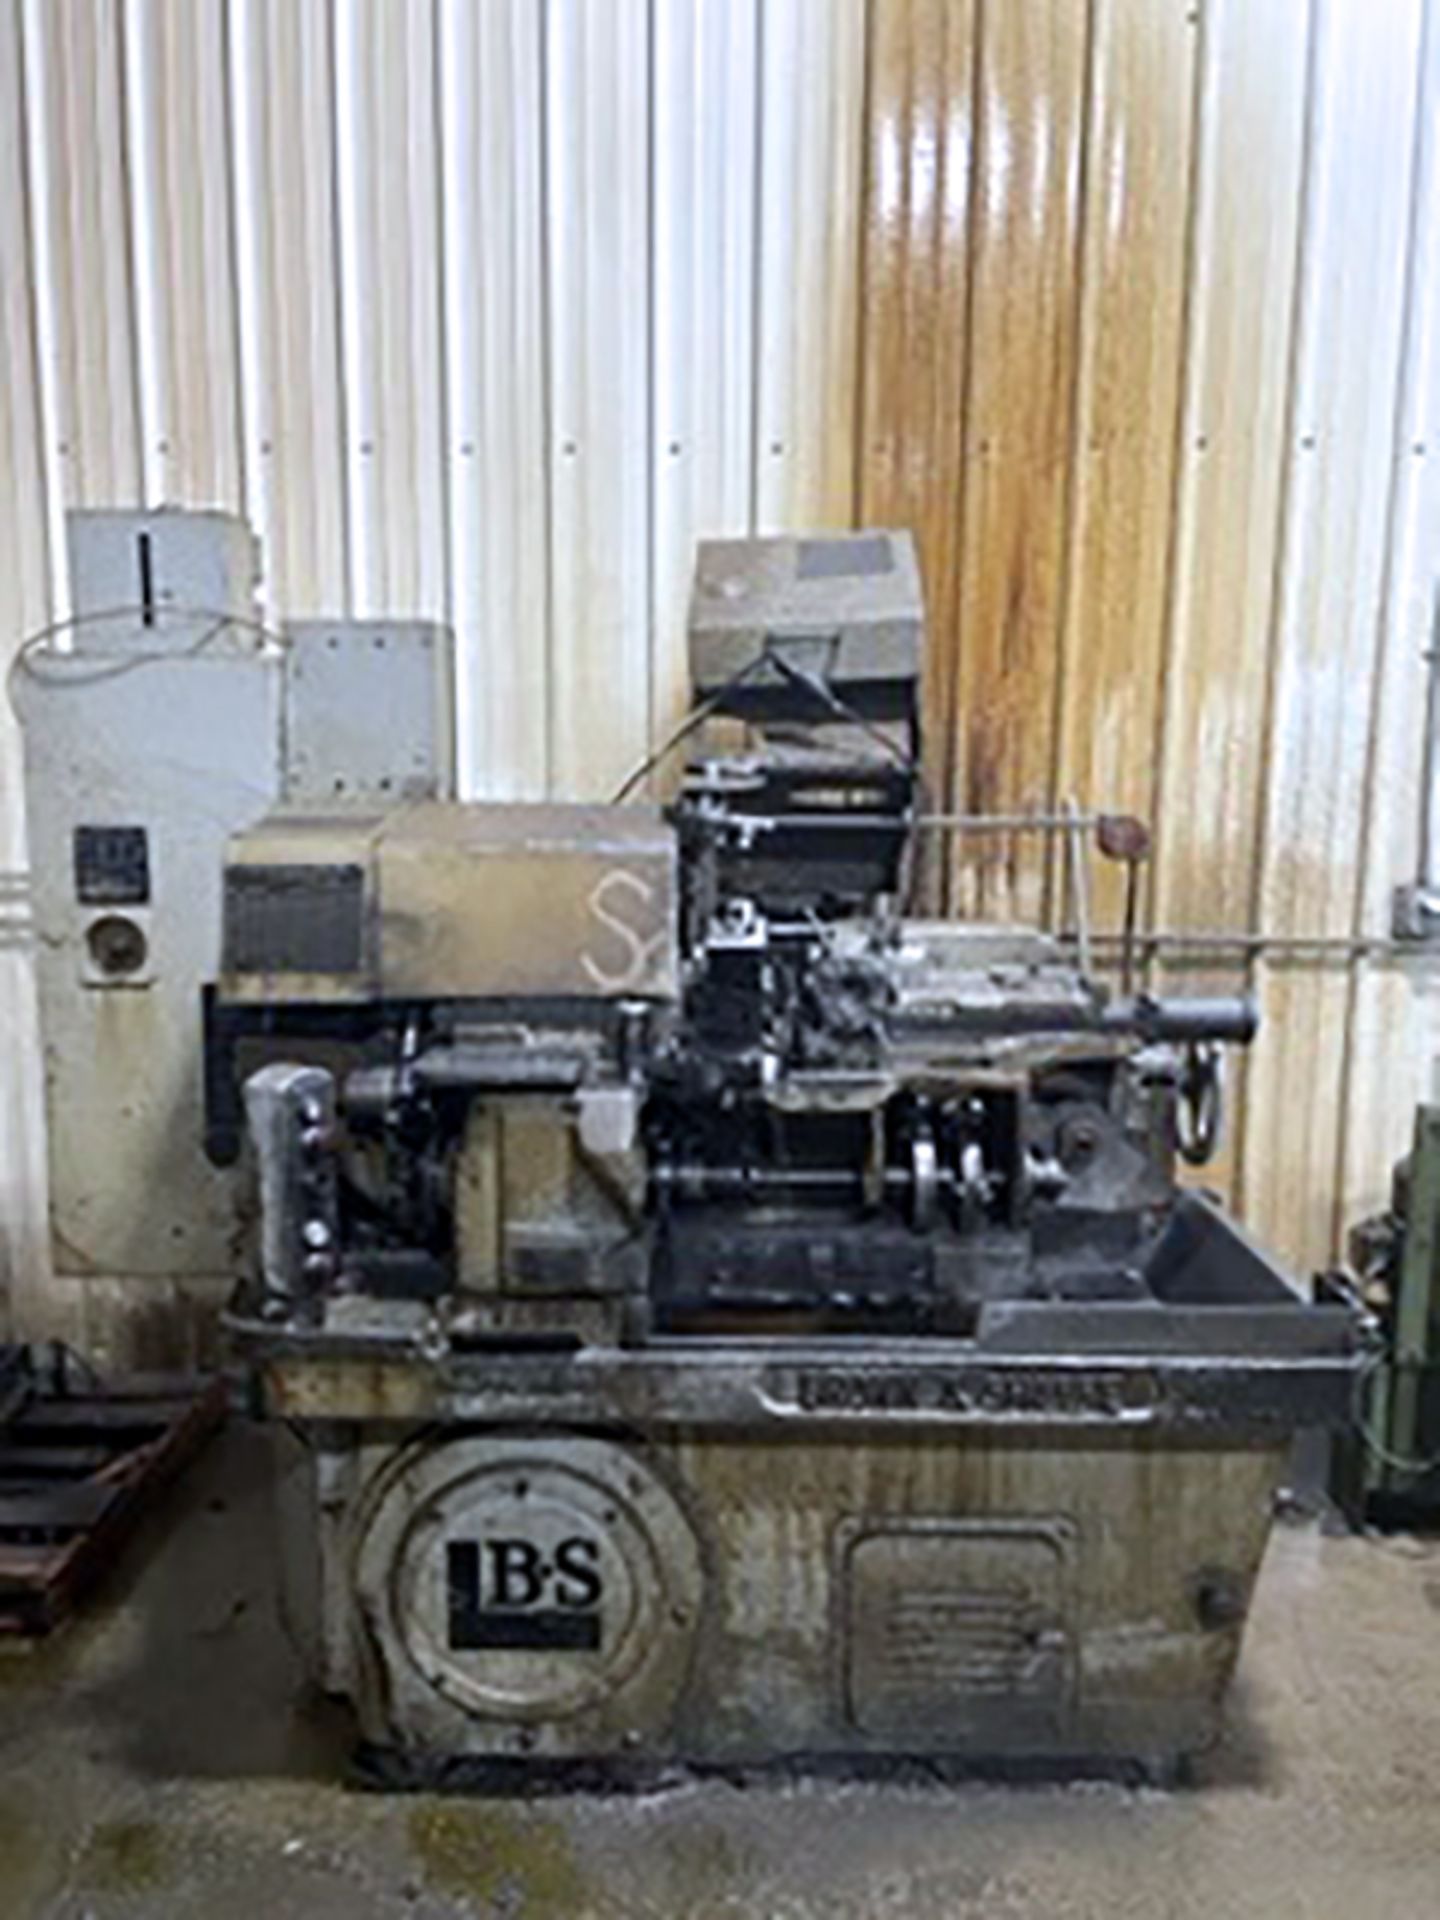 1 1/2" Brown & Sharpe #2 Square Base Automatic Screw Machine